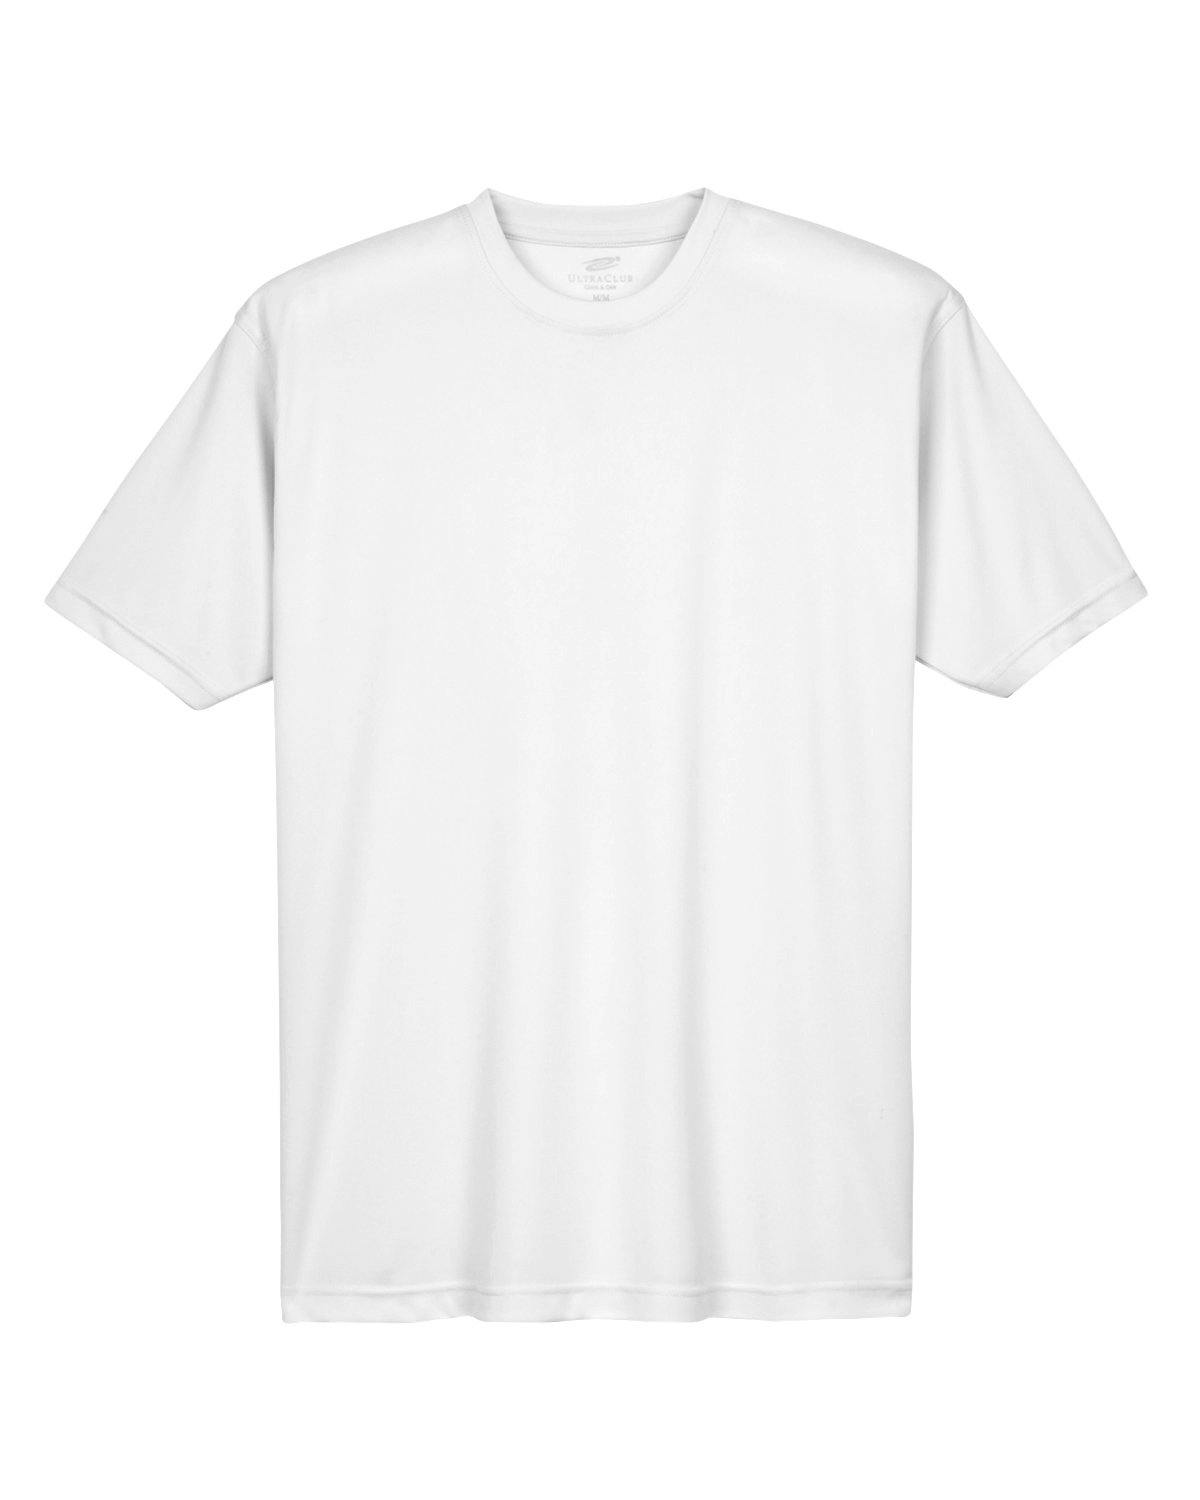 Image for Men's Cool & Dry Sport Performance Interlock T-Shirt